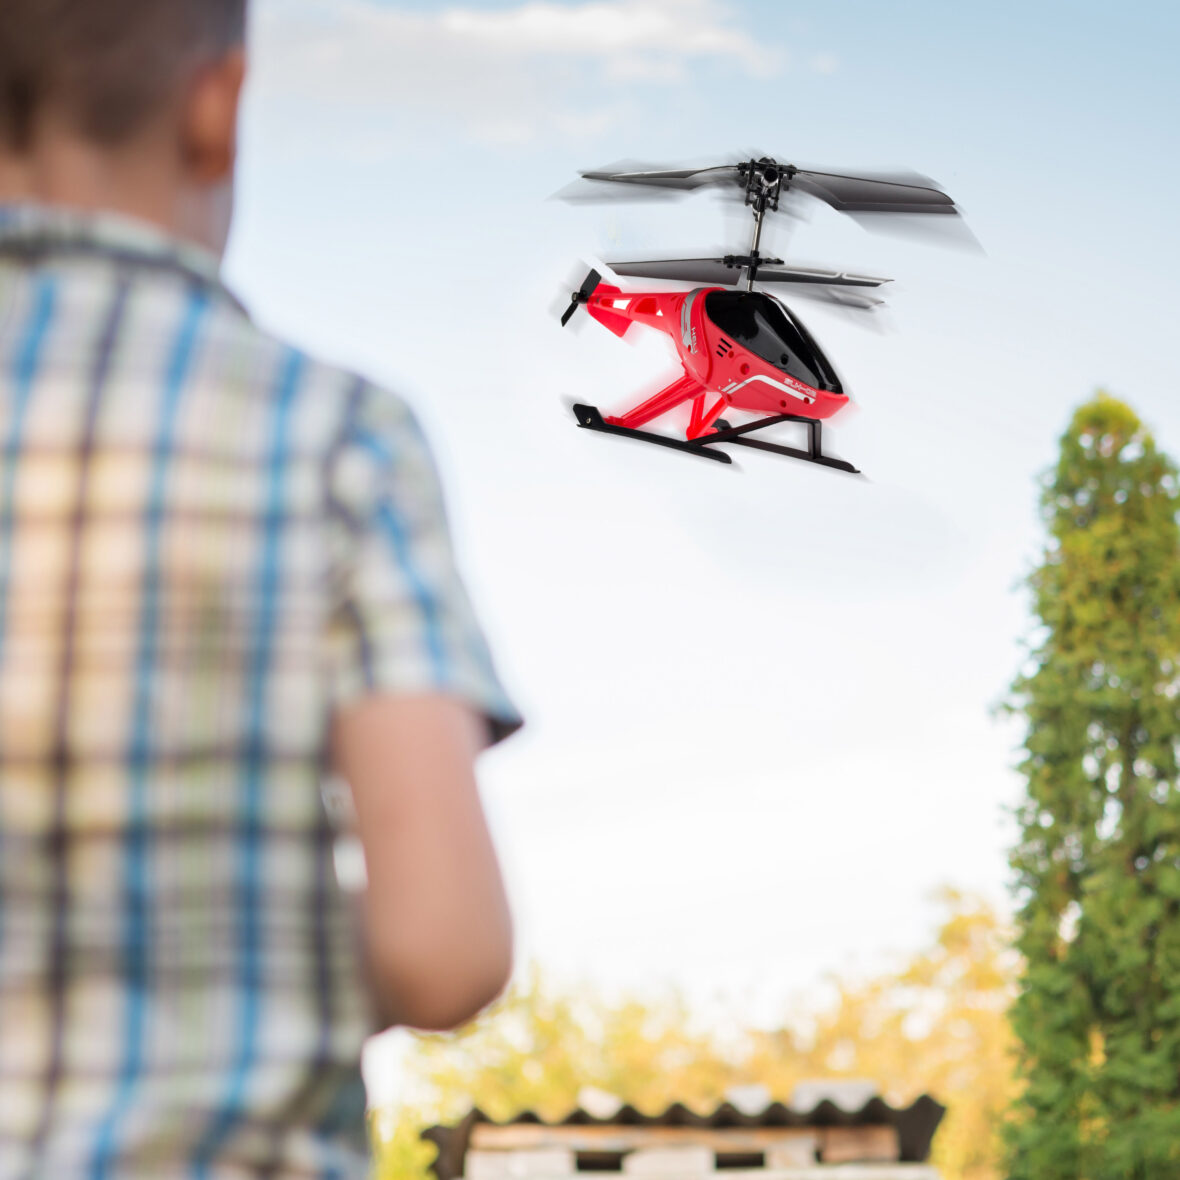 Kid flying drone. Boy operate drones